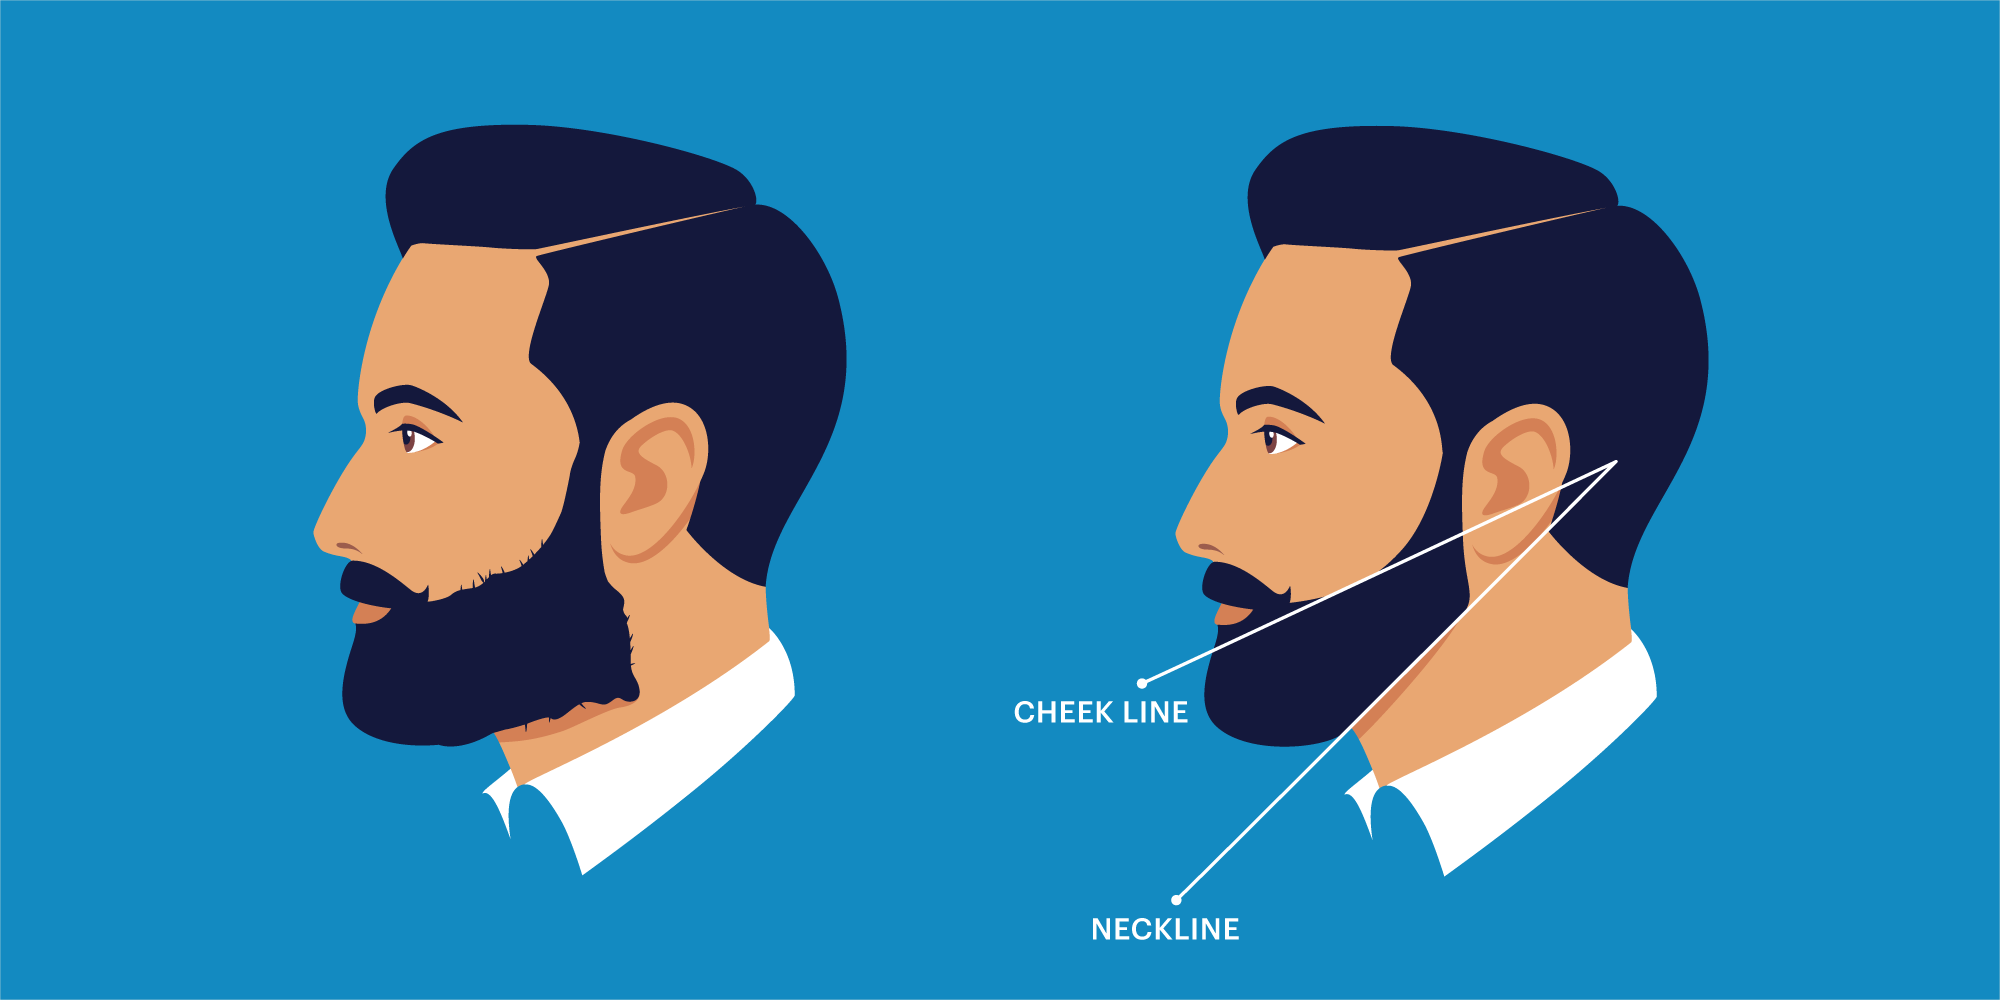 How to Trim a Beard Neckline 2022 - Beard and Cheek Line